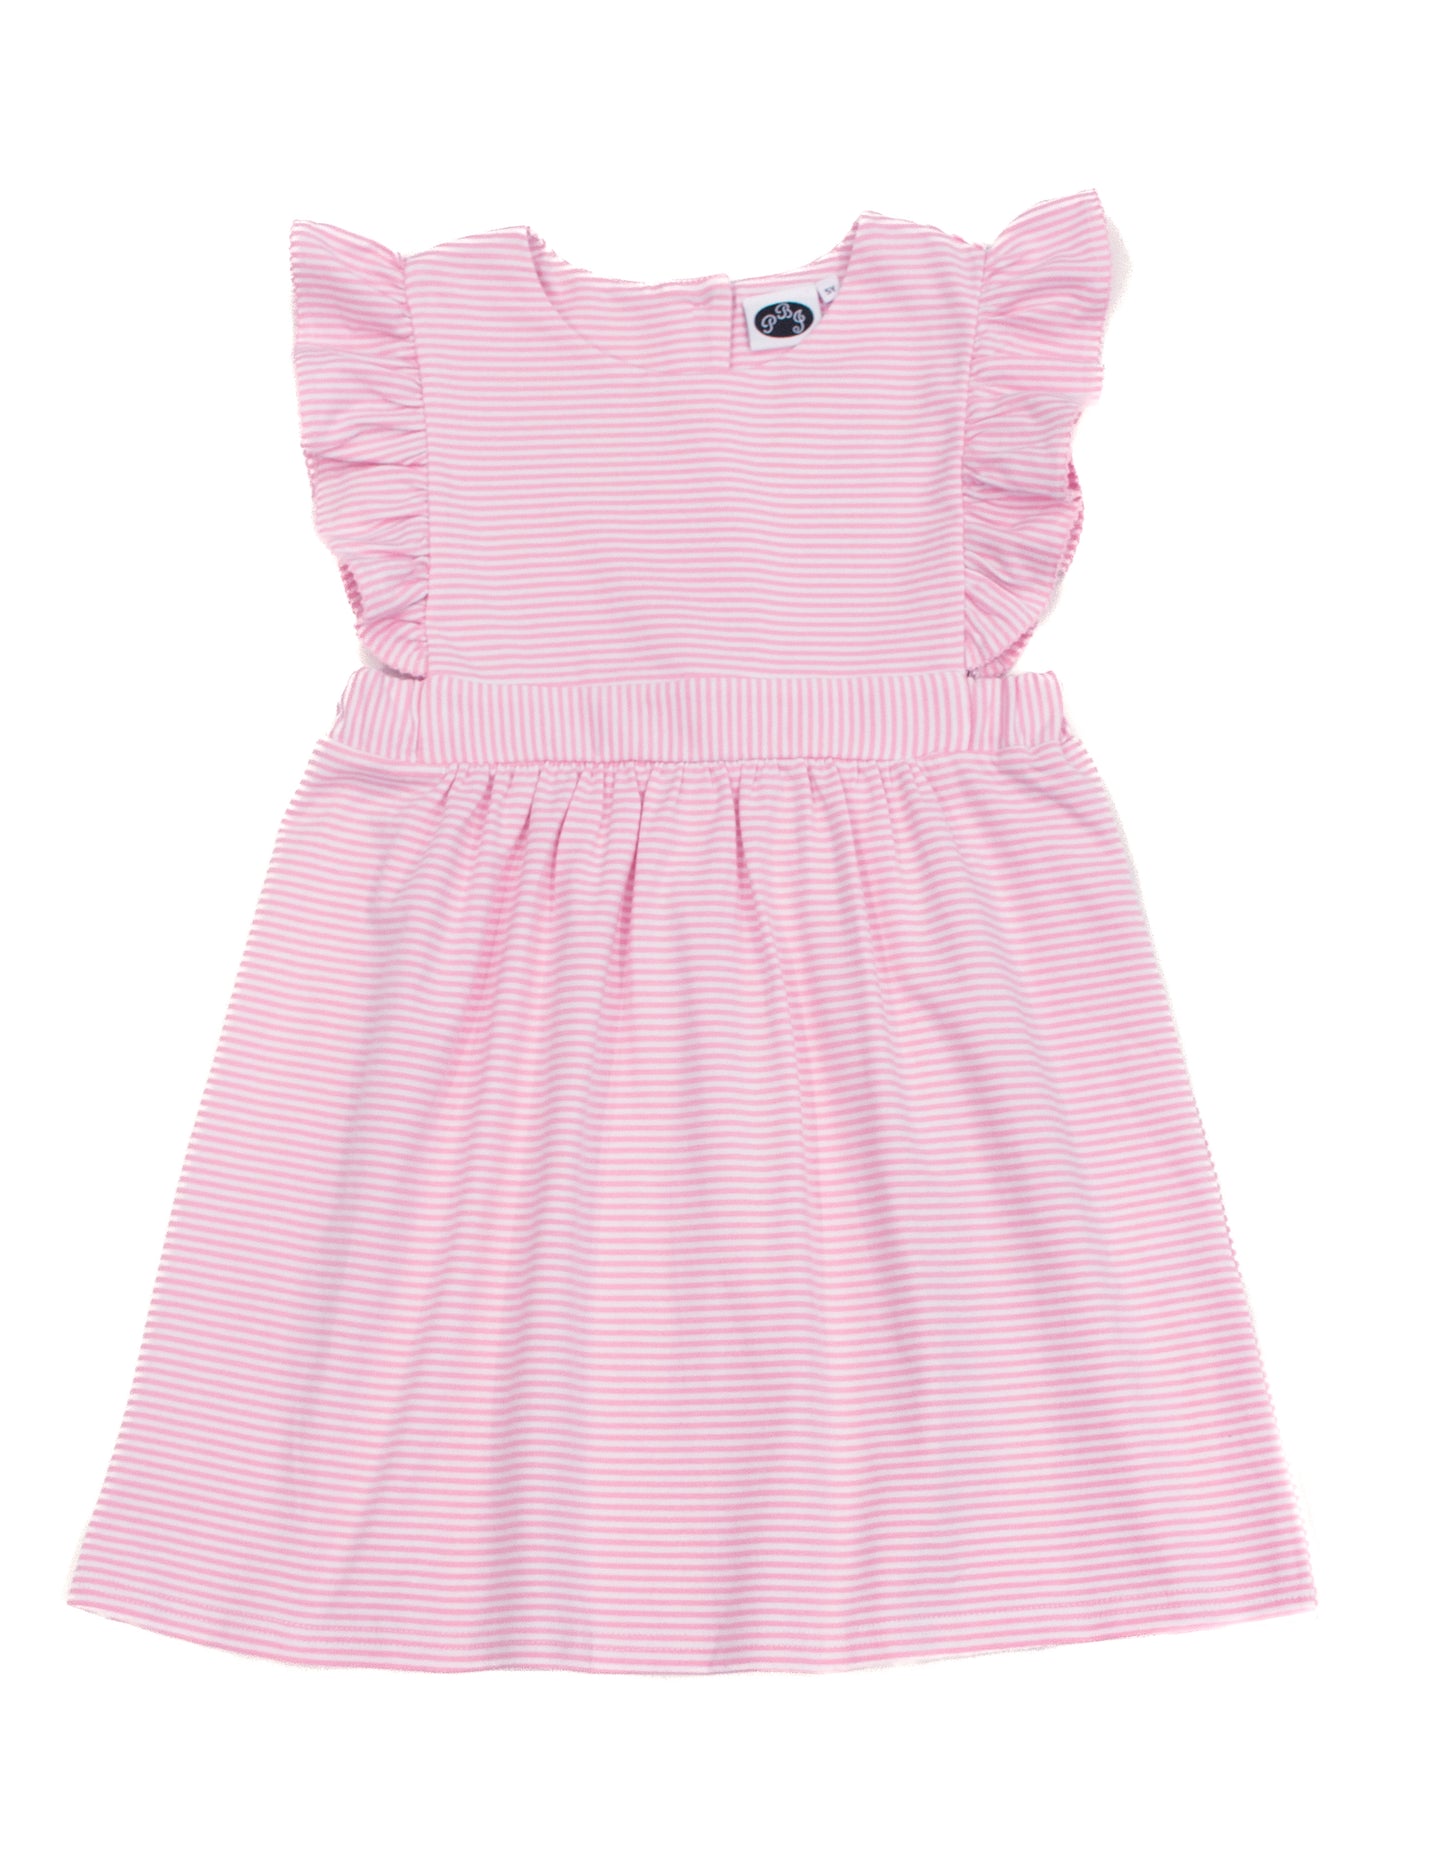 Whitney Dress Pink Stripes - Preorder*